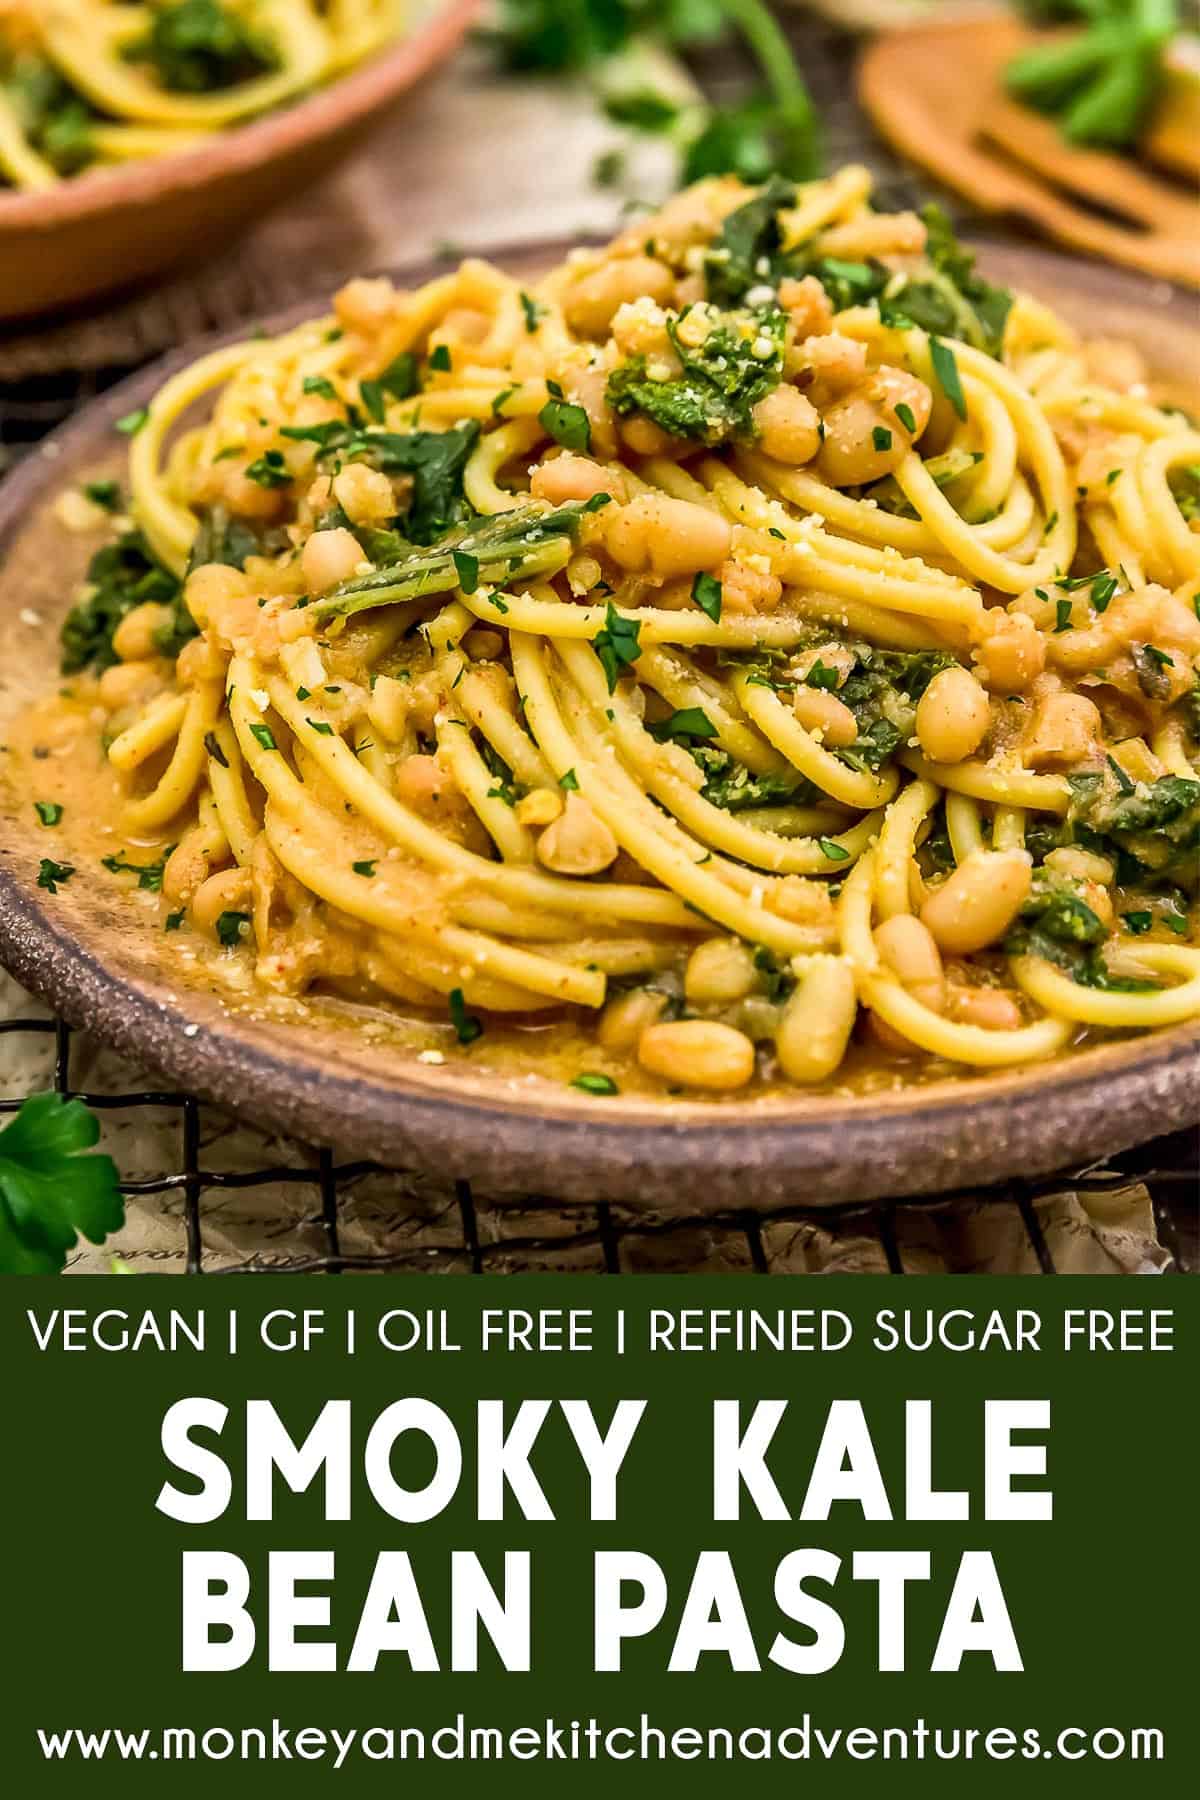 Smoky Kale and Bean Pasta with text description